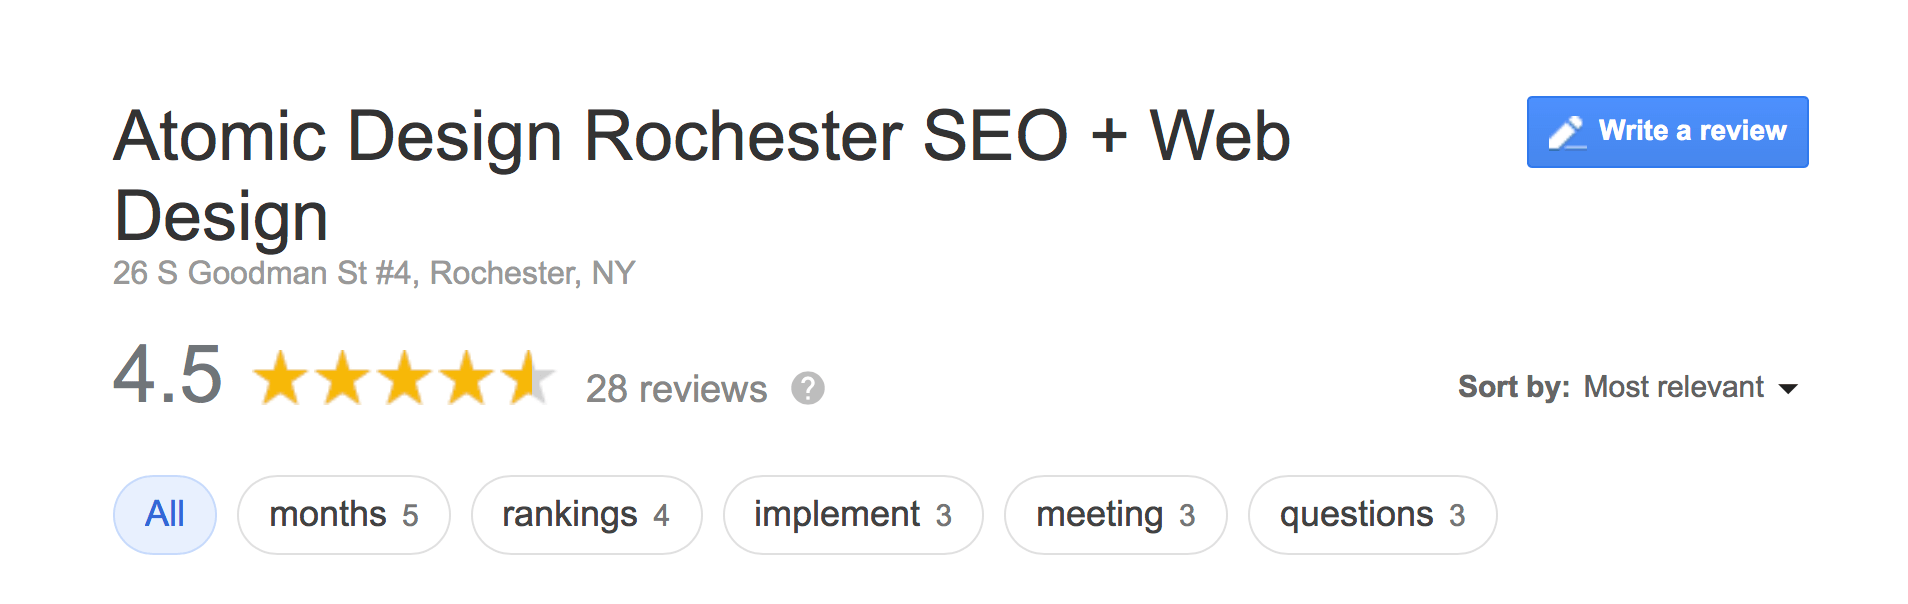 Reviews 0 rochester seo web atomic design reviews